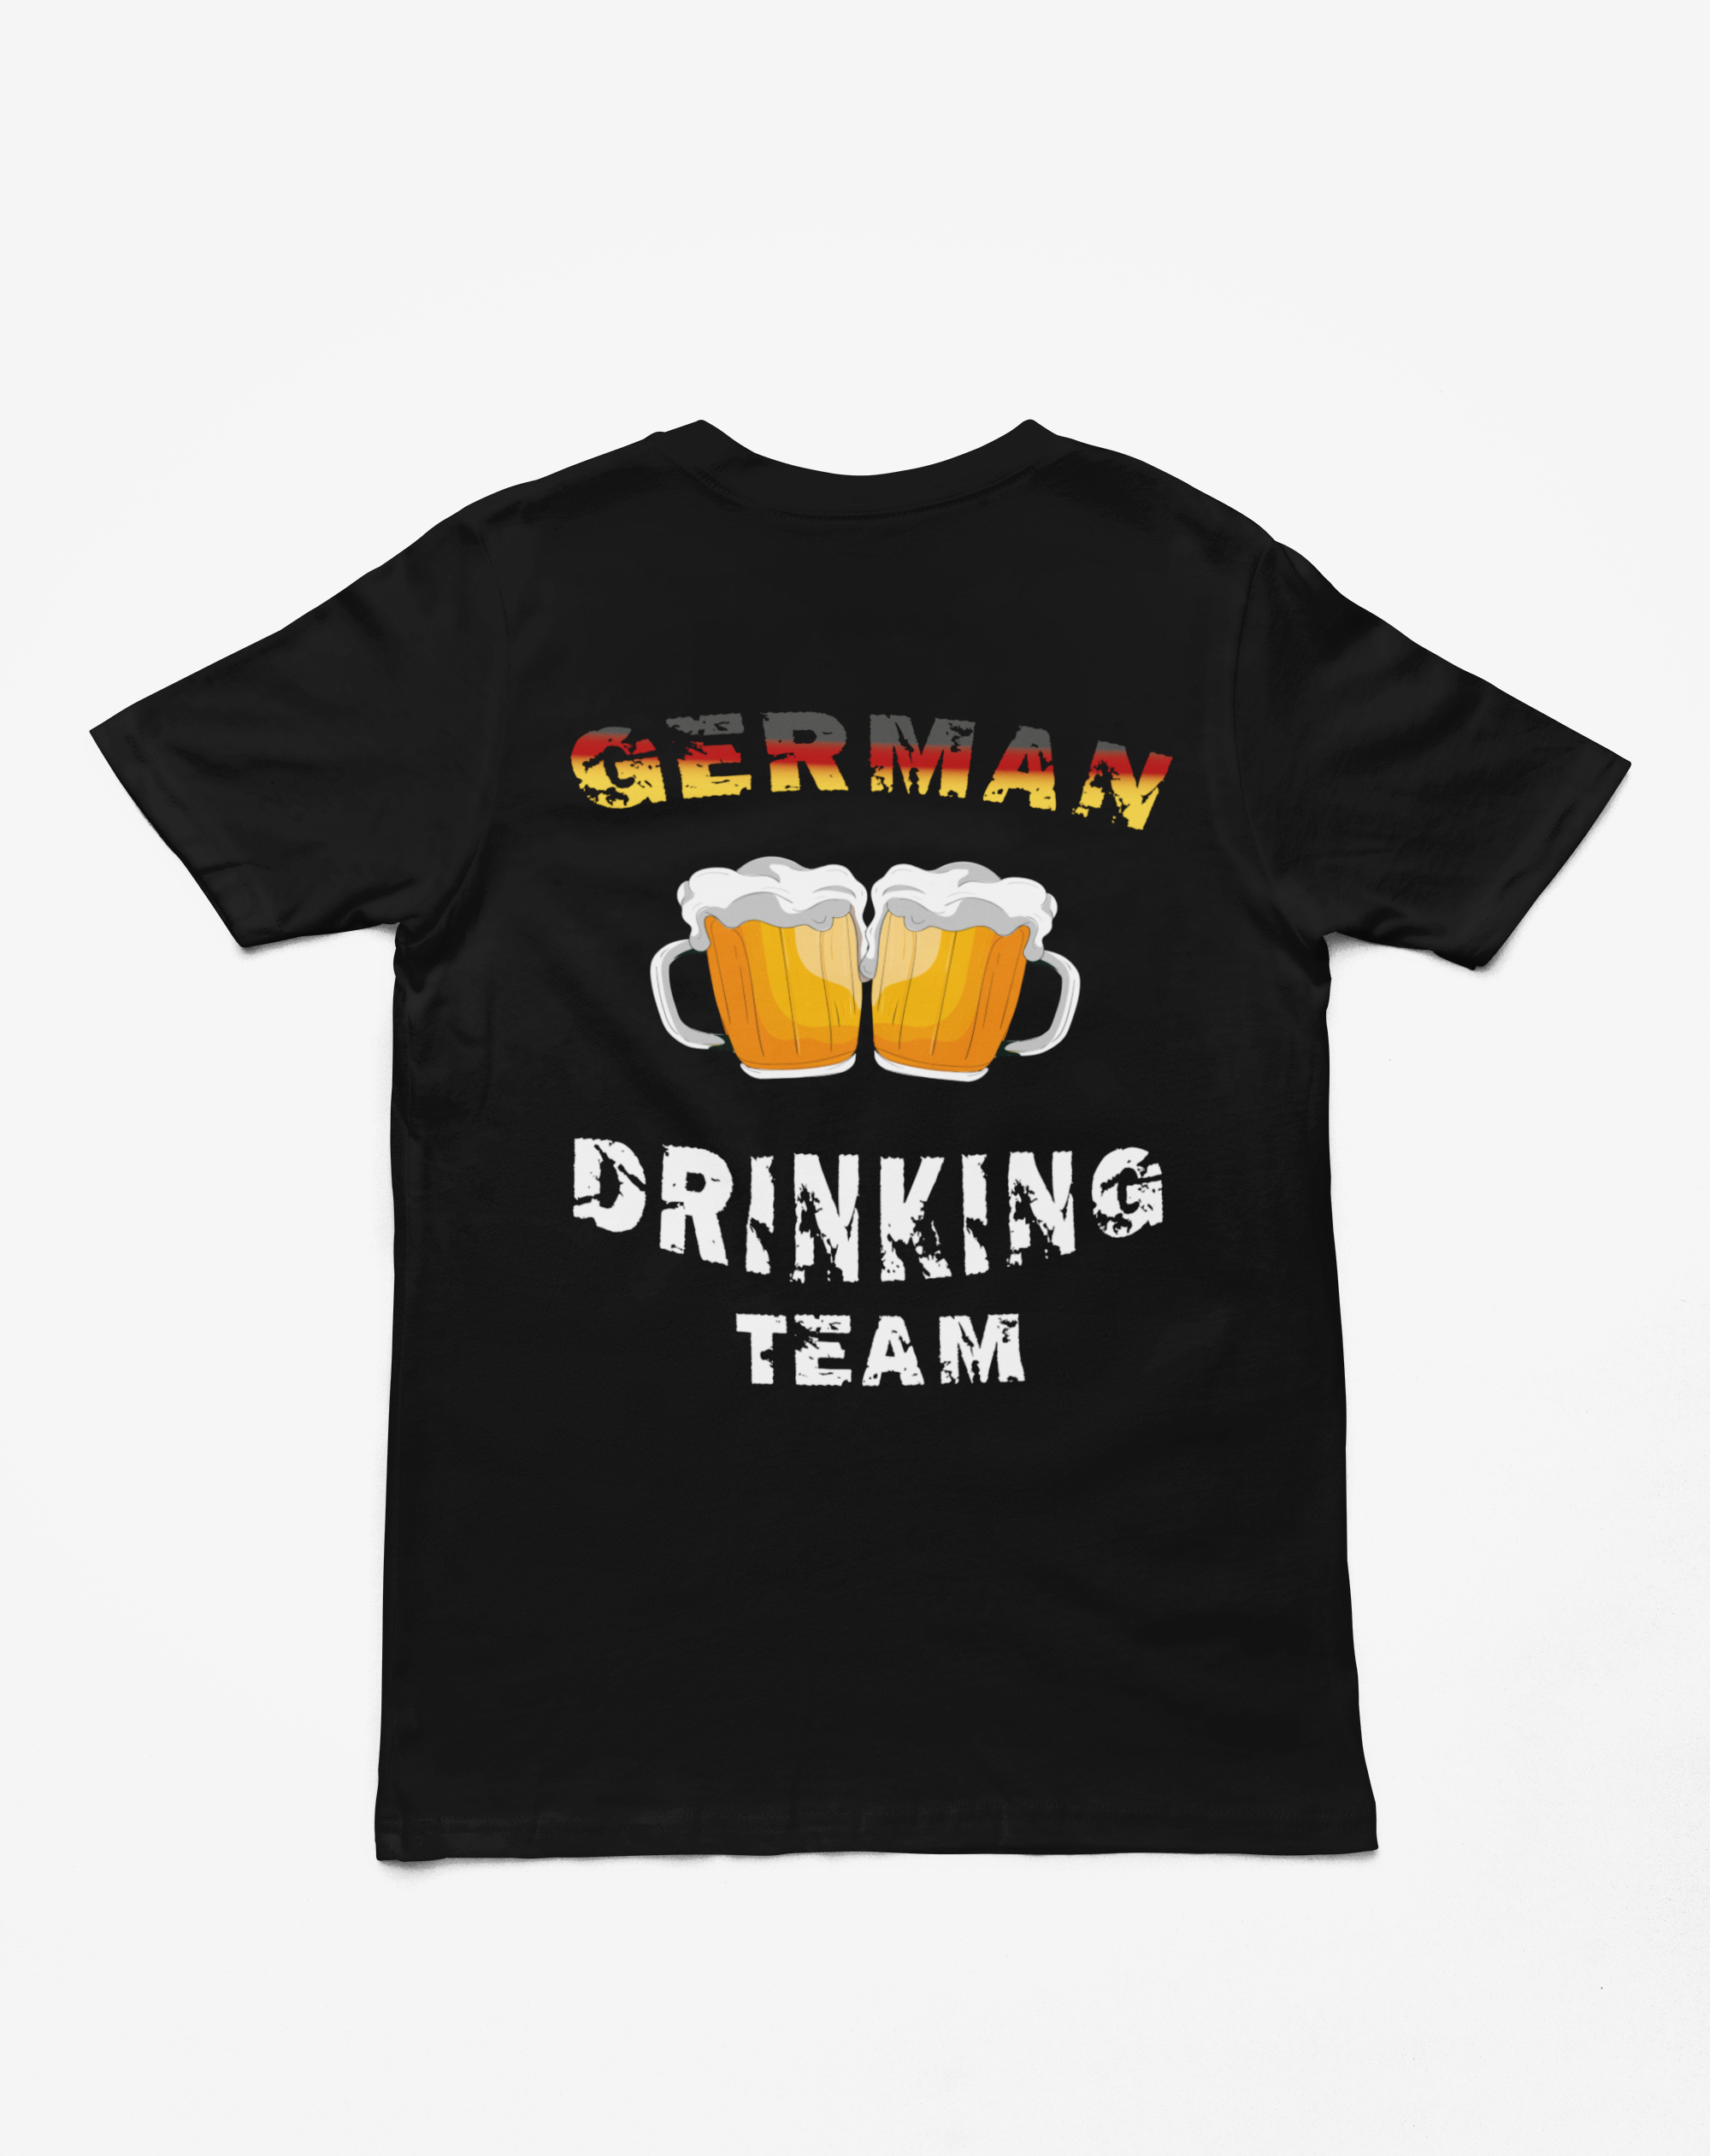 "German drinking Team" T-Shirt